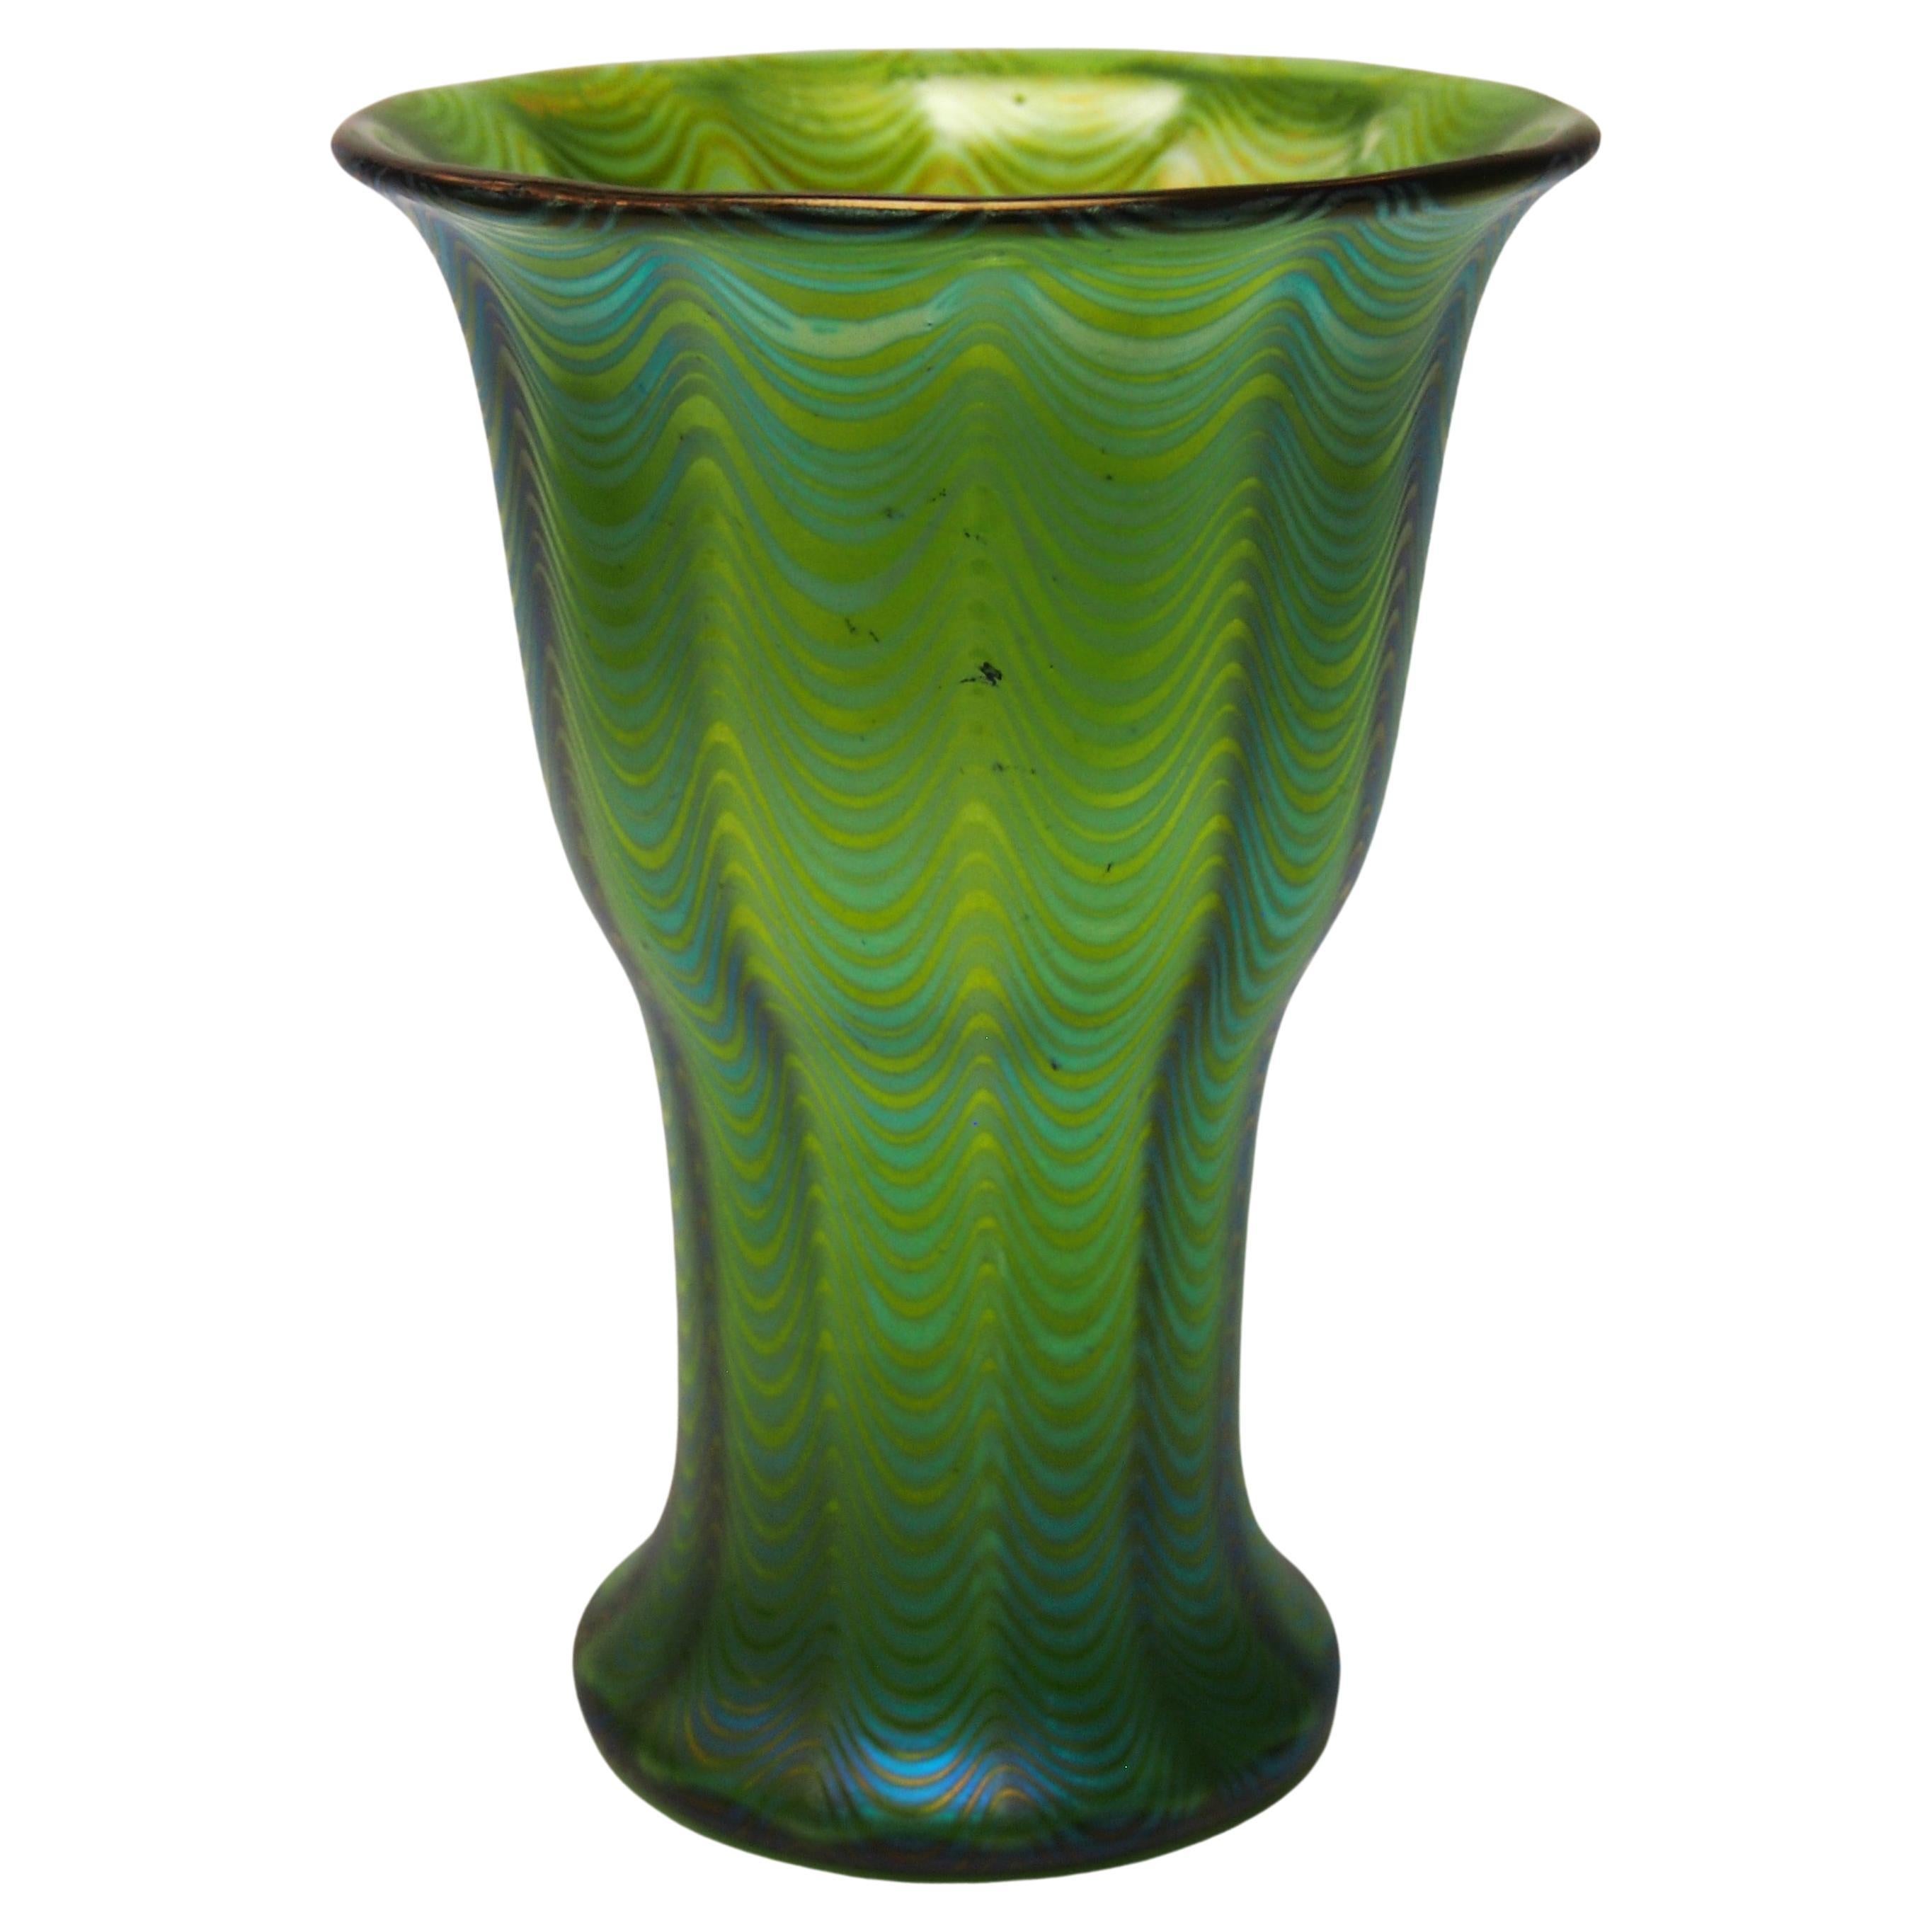 Rare and Important Loetz Phaenomen Vase Crete PG 6893 made 11898 For Sale